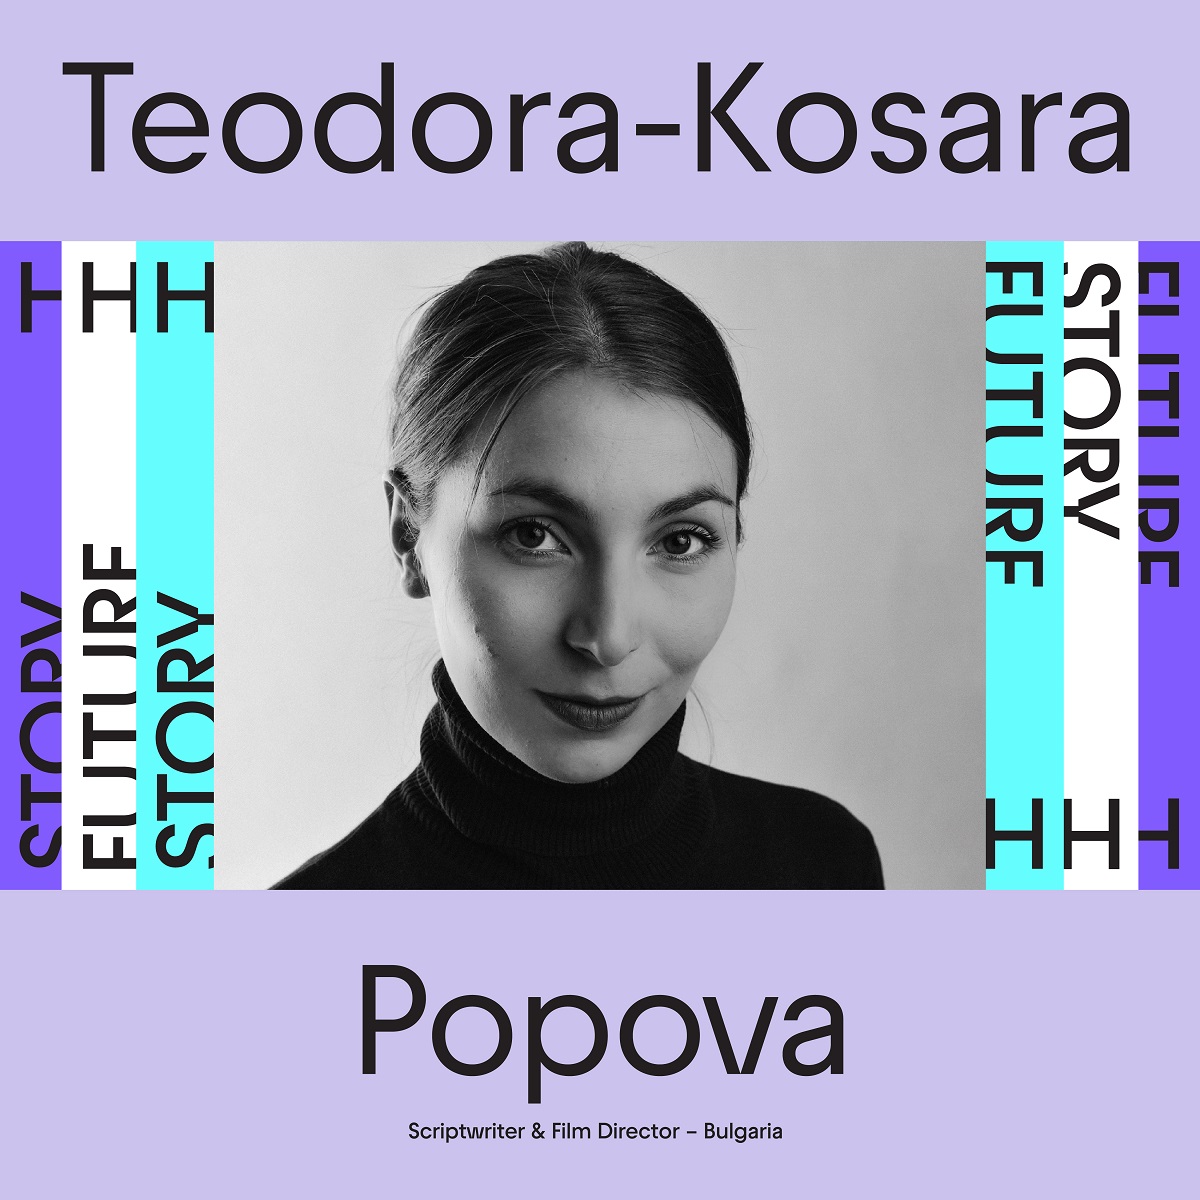 Her Story Her Future_Teodora-Kosara Popova